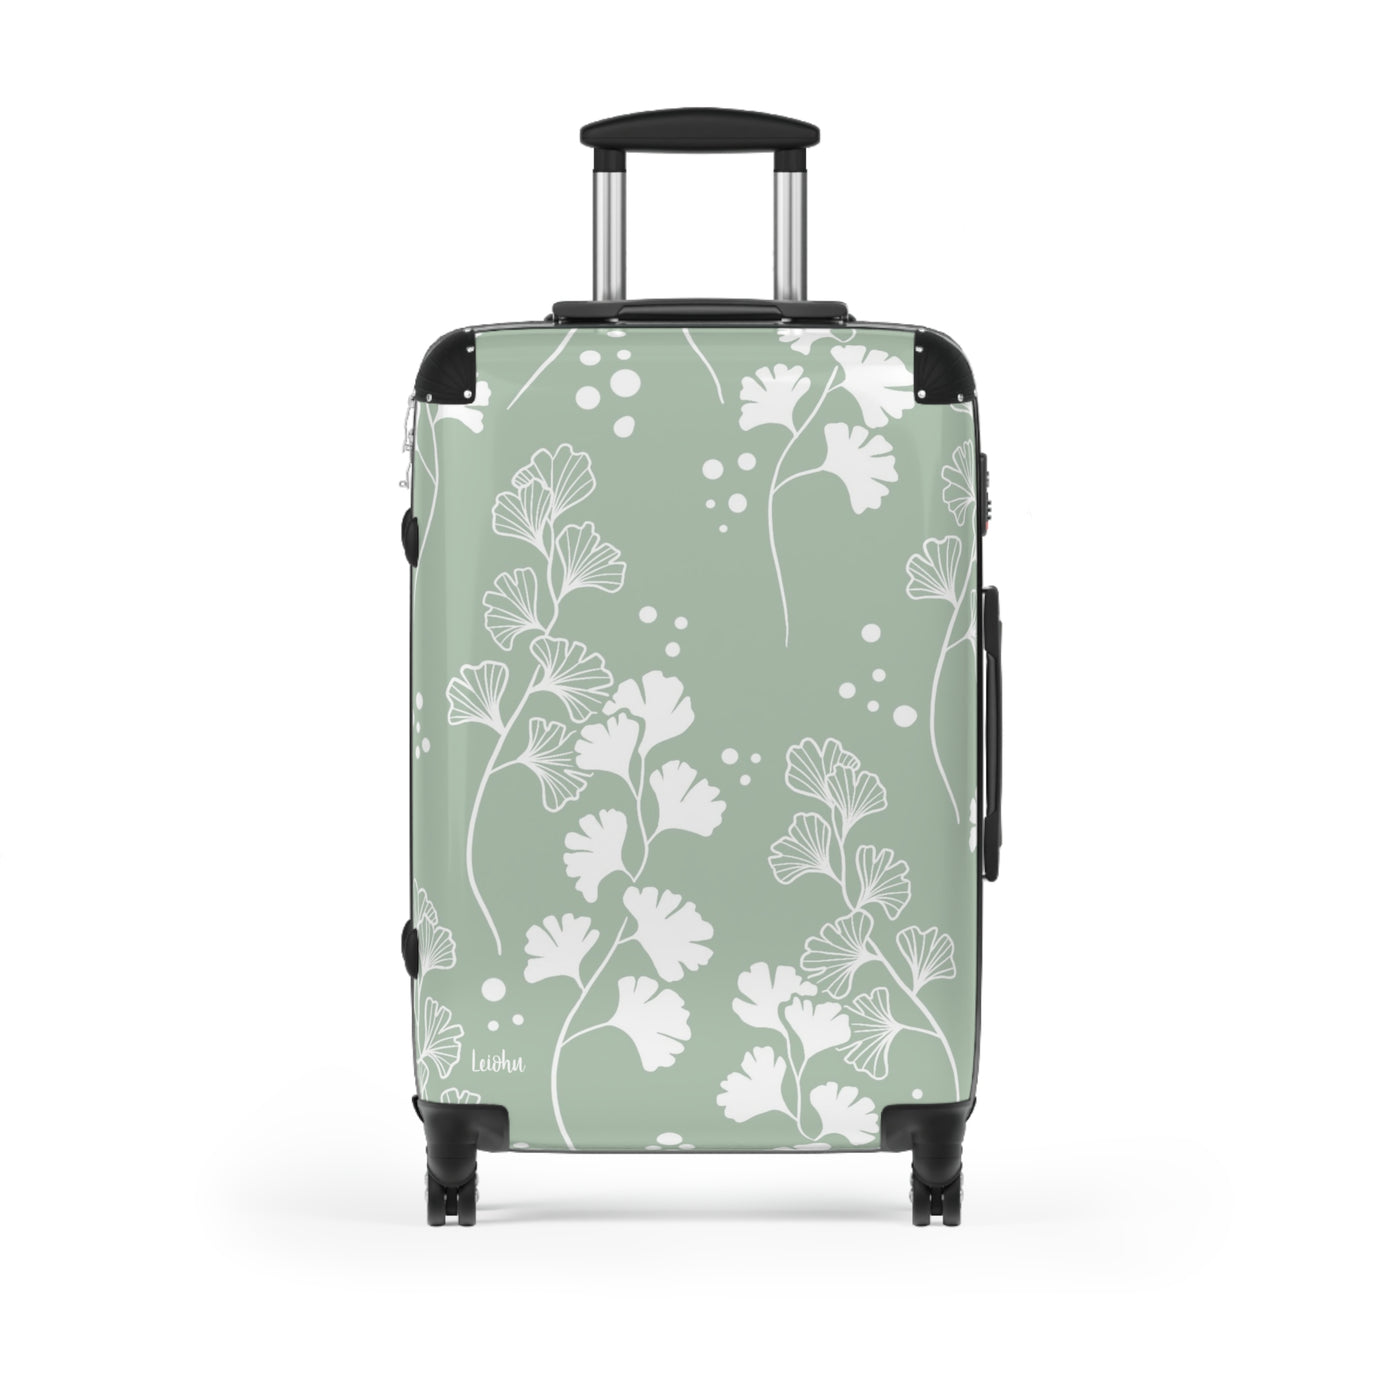 Groovy 'Iwa'iwa - Cabin Suitcase